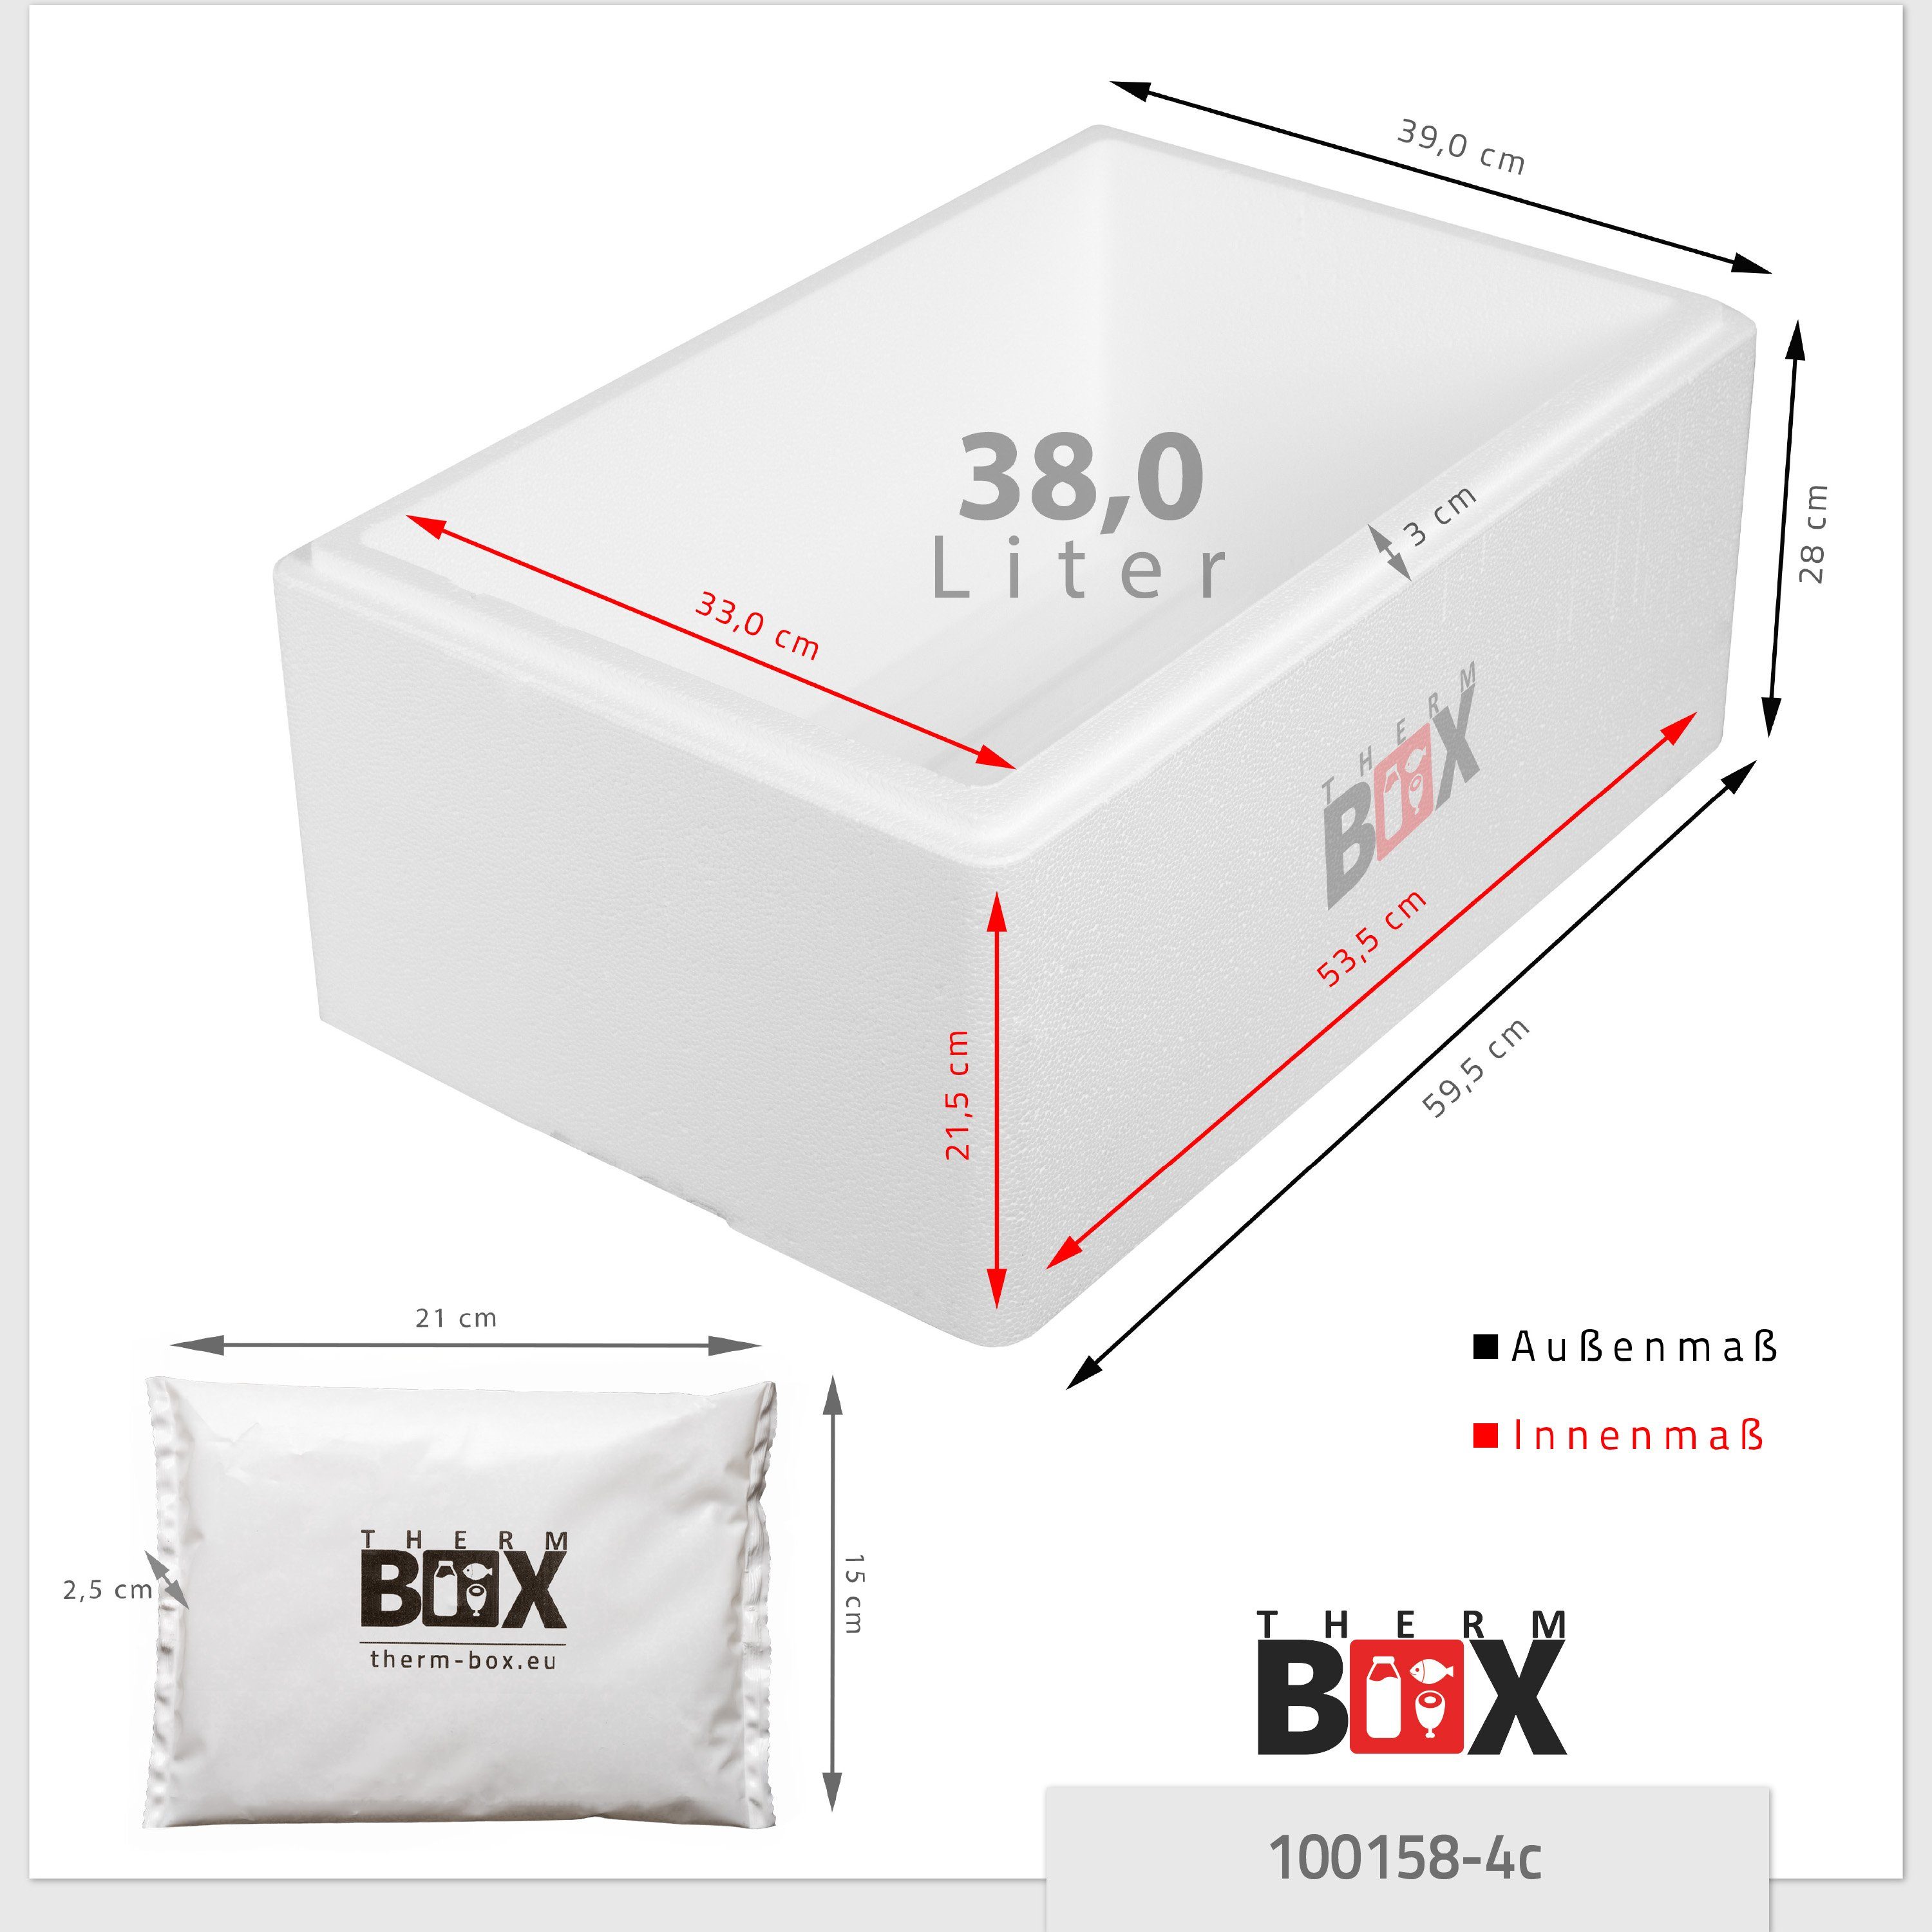 THERM-BOX Thermobehälter Styroporbox mit Thermbox mit 38L Transportbox Styropor-Verdichtet, Kühlbox Kühlkissen, 4 Kühlakku (0-tlg., Wiederverwendbar 38W Kühlkissen), Innen:53x33x21cm